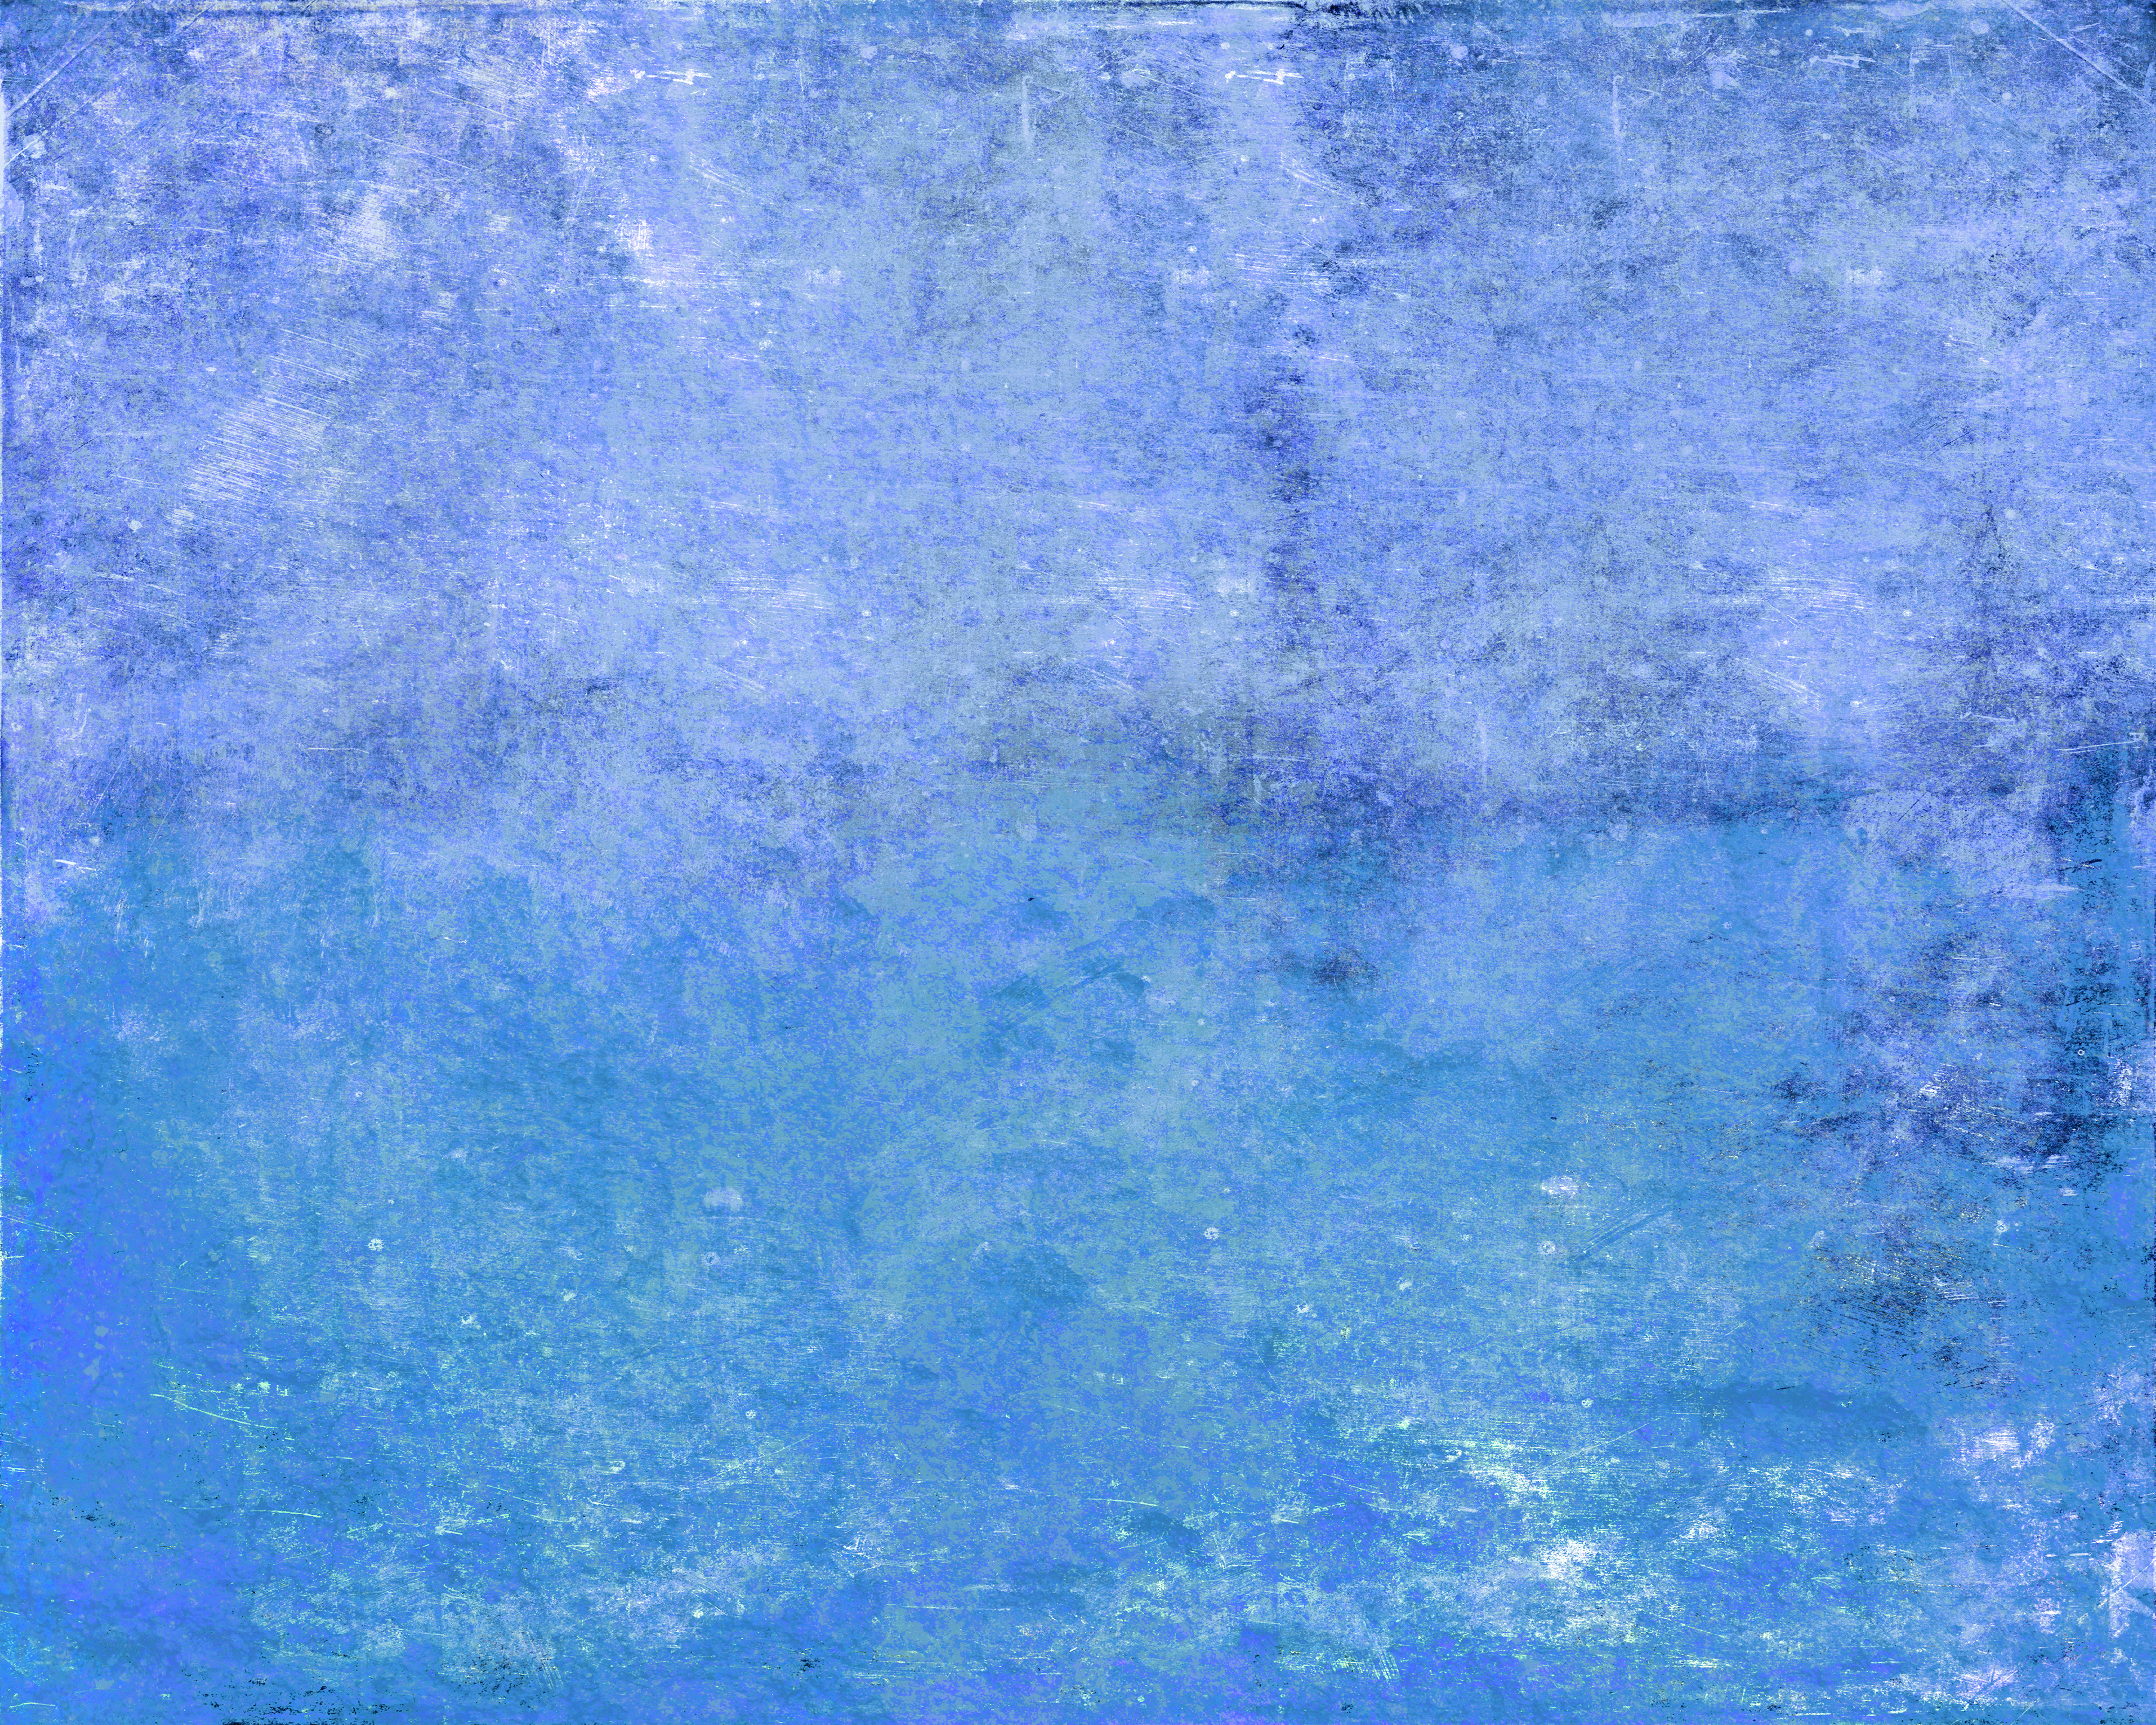 Origin Murals Grunge Distressed Effect Blue Wall Mural - 3 x 2.4m